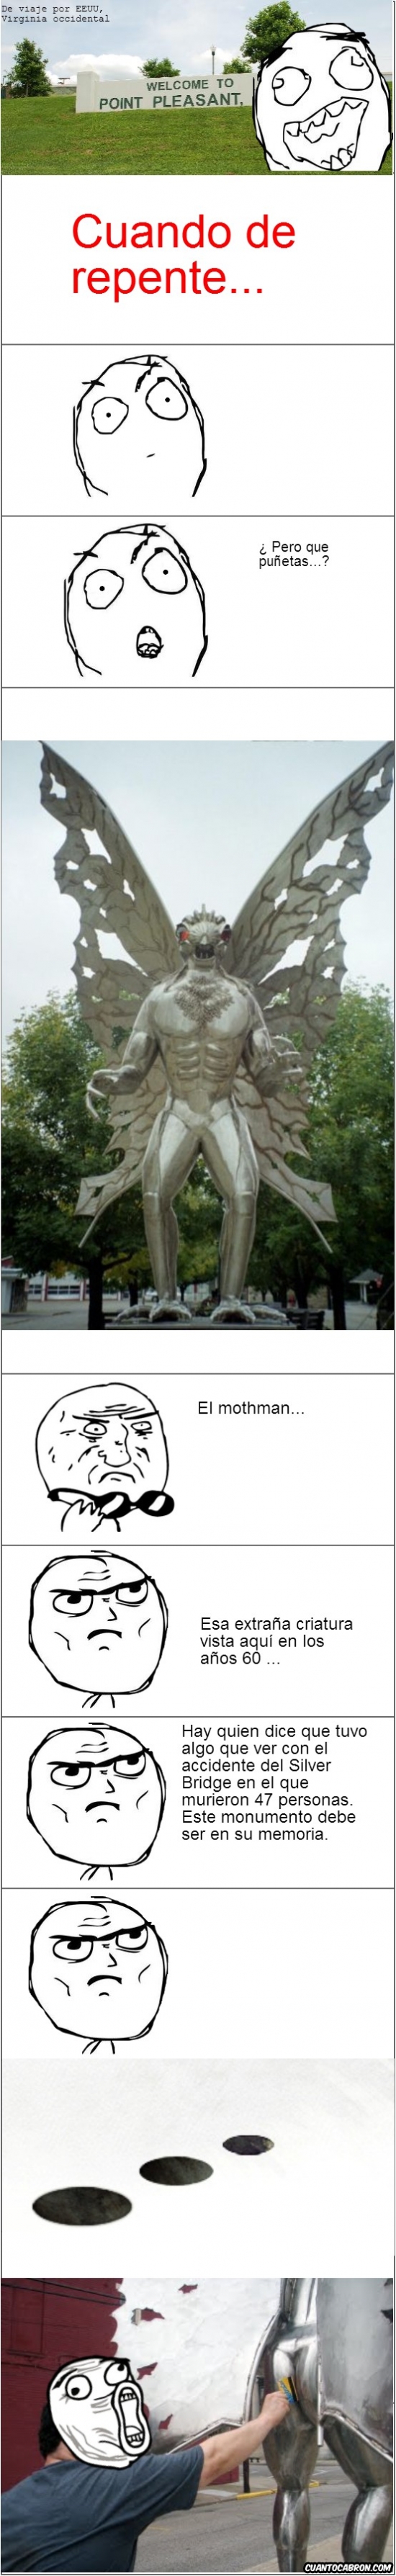 Lol - La inquietante estatua del Mothman